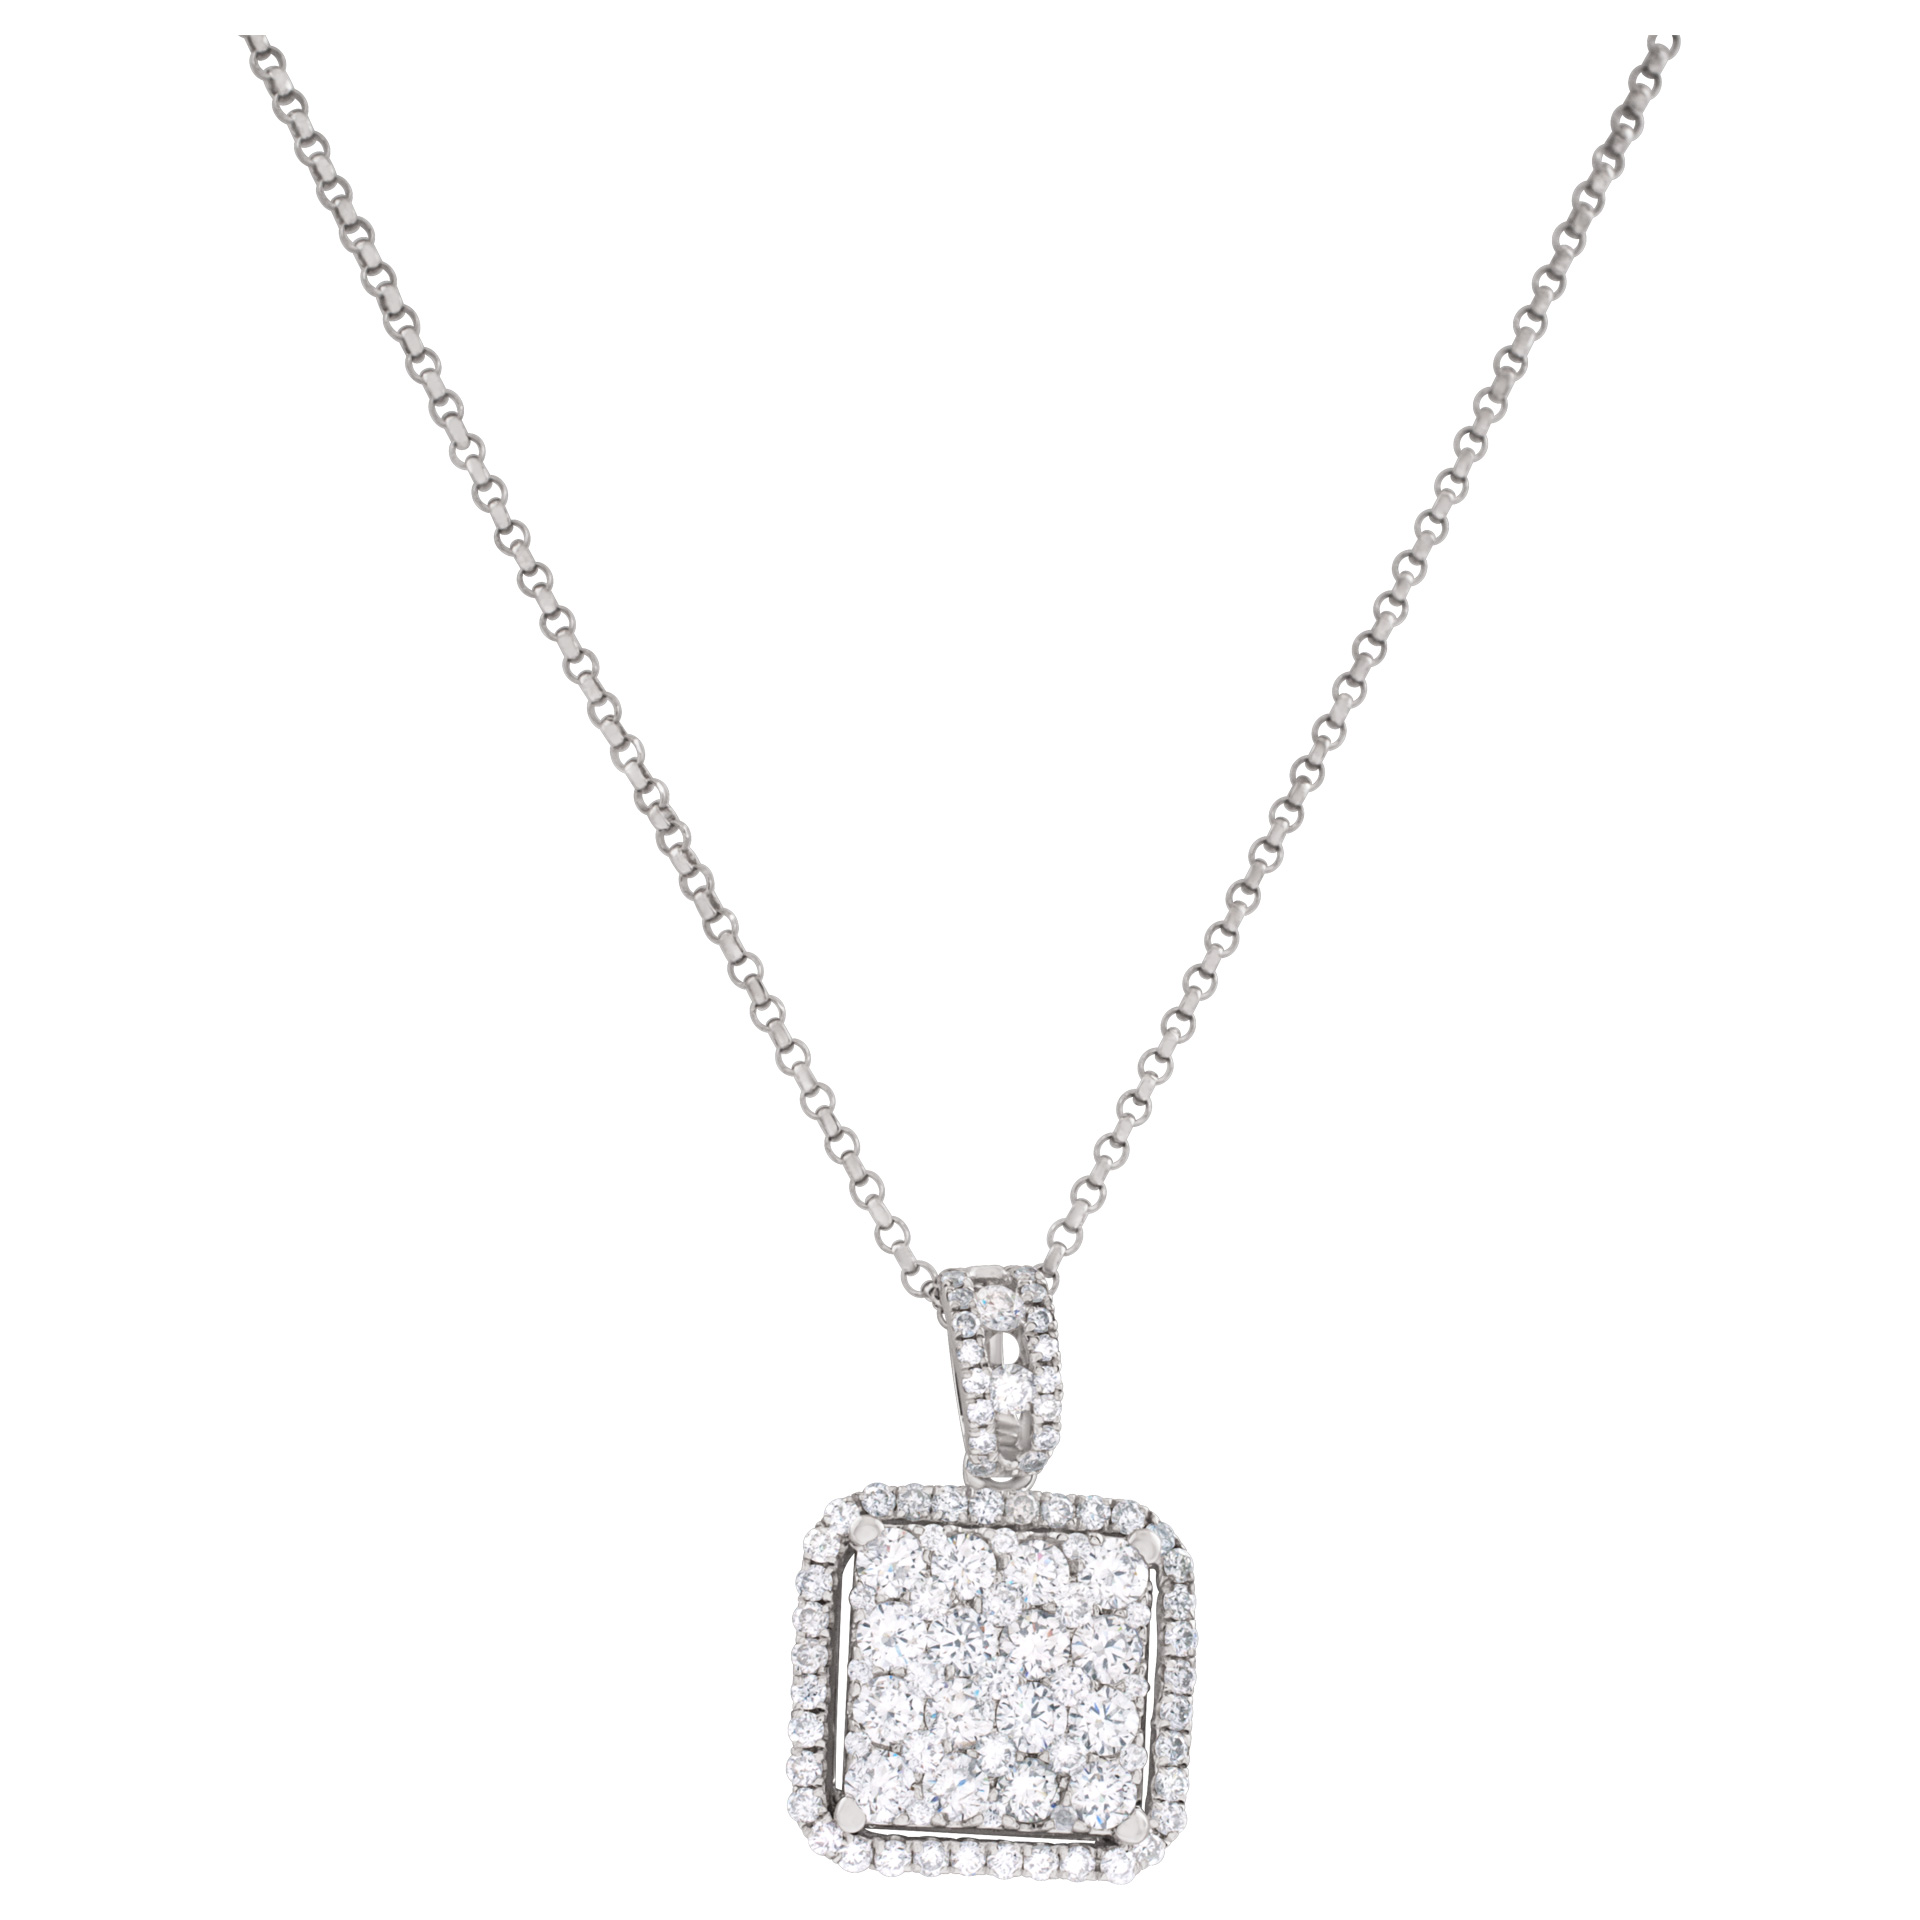 Diamond pendant on 18k white gold chain.  1.43 carats in diamonds